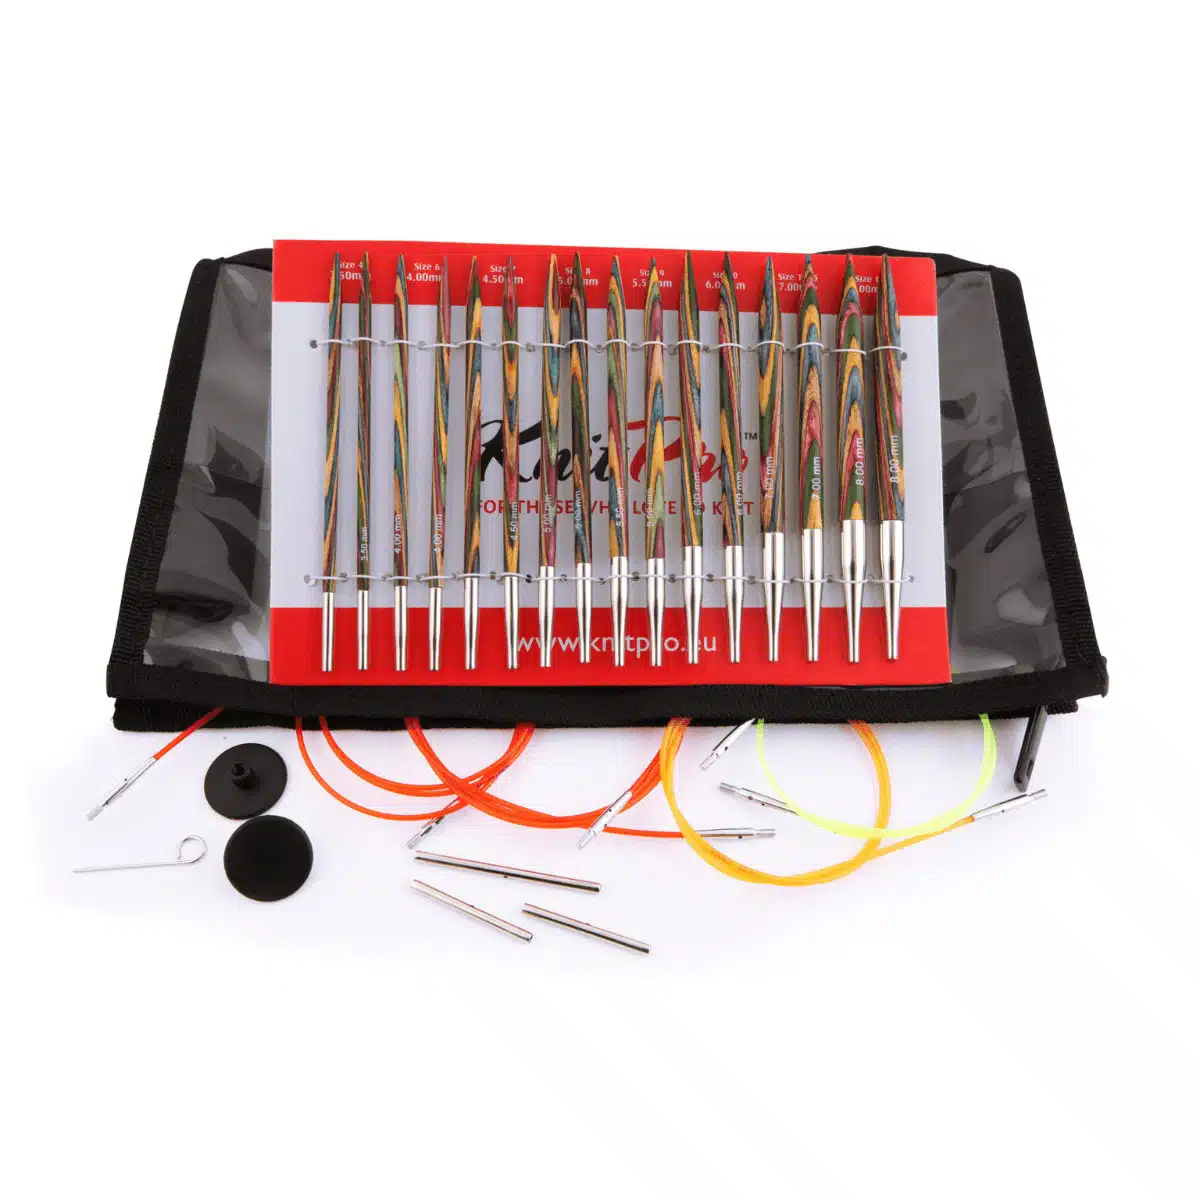 Knit Pro Symphonie Deluxe Interchangeable Needle set